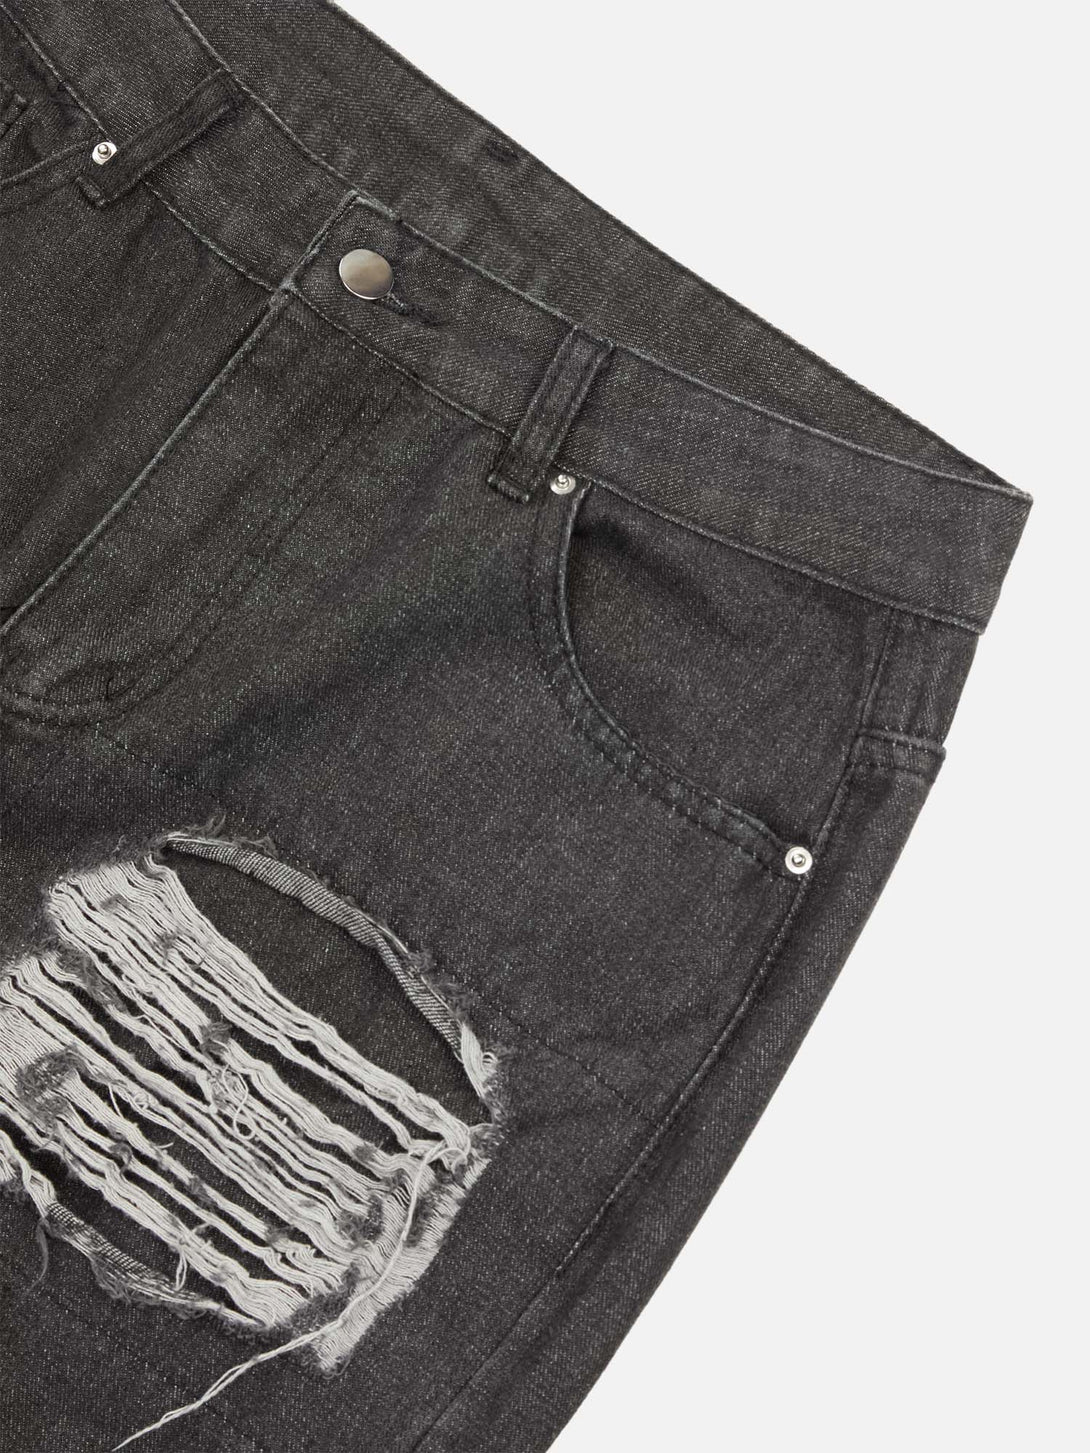 Majesda® - Destruction Brushed Hip Hop Embroidered Jeans- Outfit Ideas - Streetwear Fashion - majesda.com